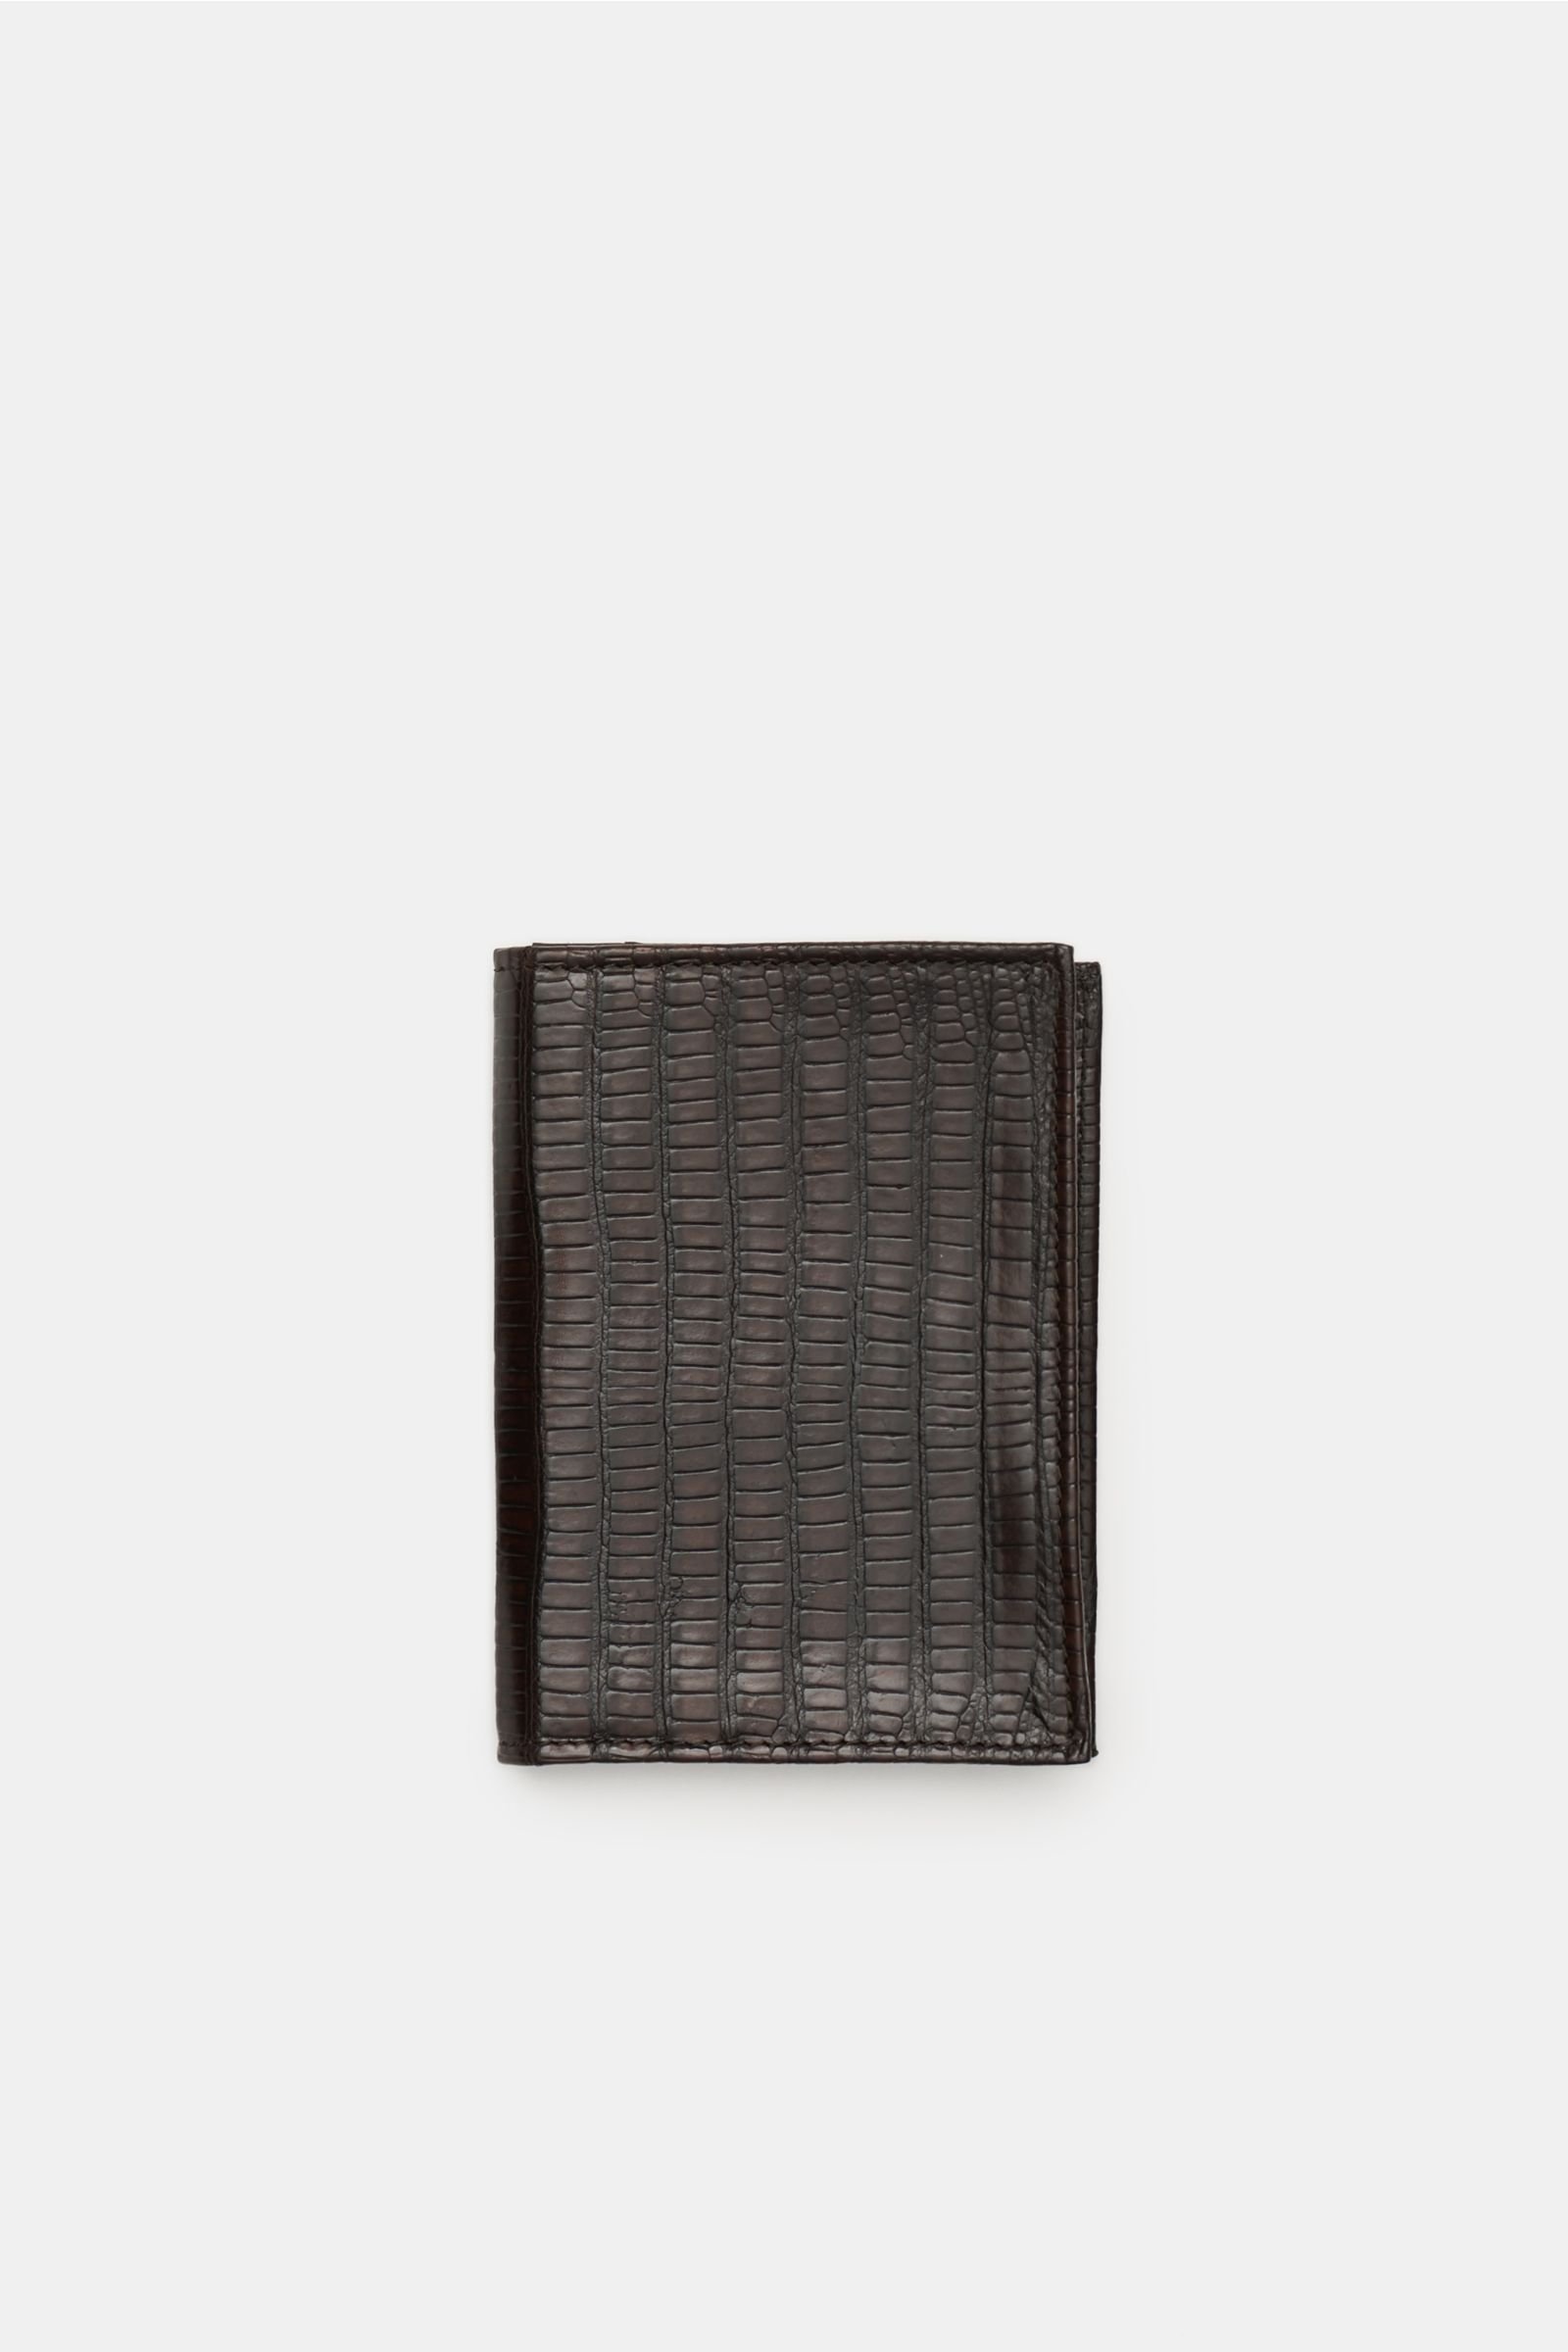 Snakeskin credit card holder dark brown